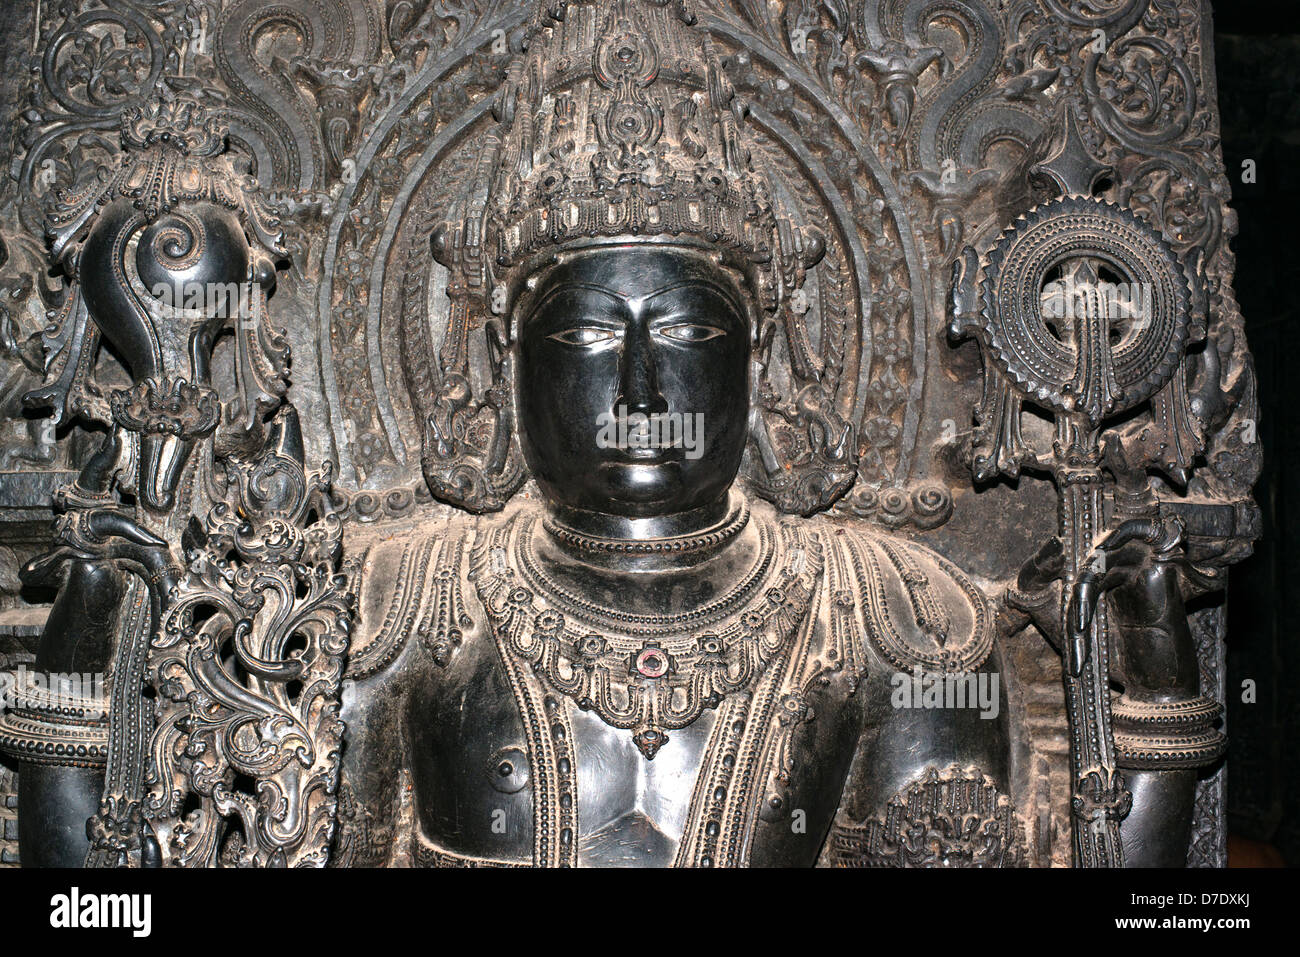 Una obra maestra de la escultura Hoysala los guardias de la entrada interior del templo hindú en Belur, cerca de Hassan en Karnataka, India Foto de stock